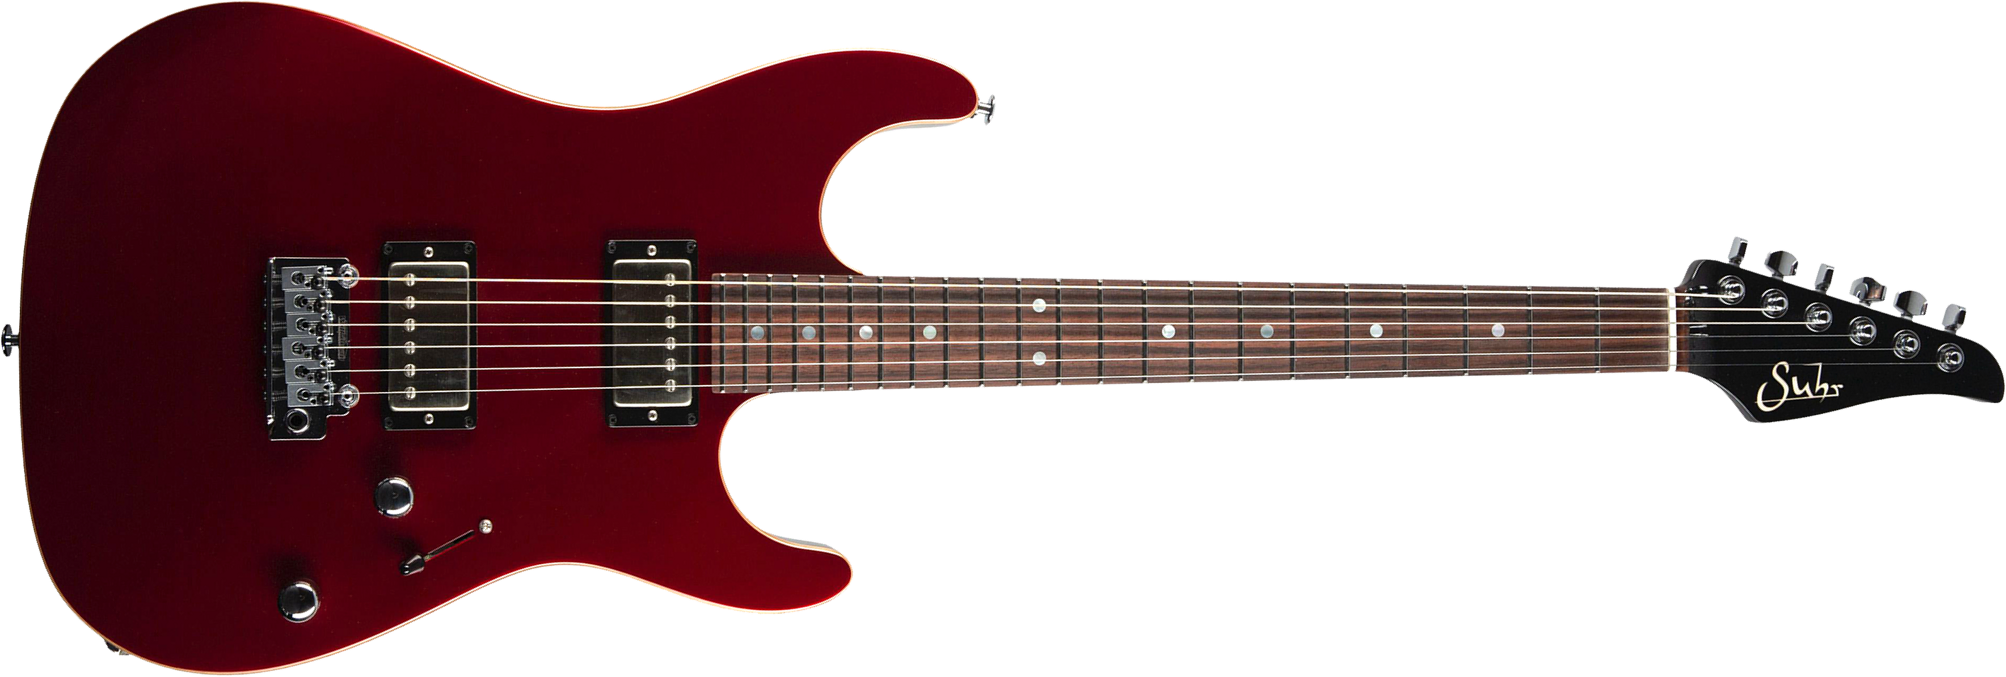 Suhr Pete Thorn Standard 01-sig-0029 Signature 2h Trem Rw - Garnet Red - E-Gitarre in Str-Form - Main picture